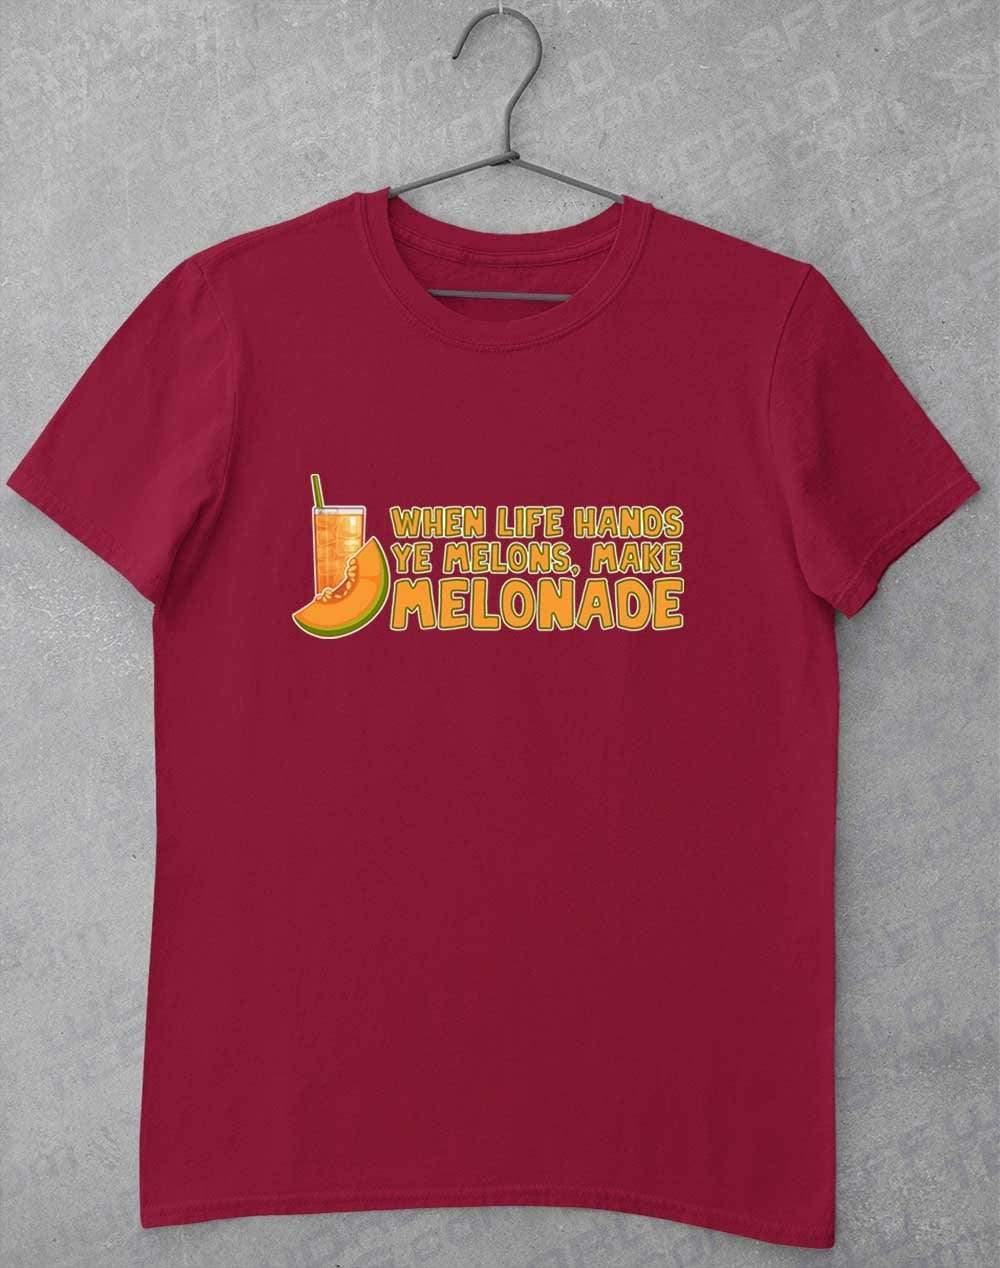 Make Melonade T-Shirt S / Cardinal Red  - Off World Tees